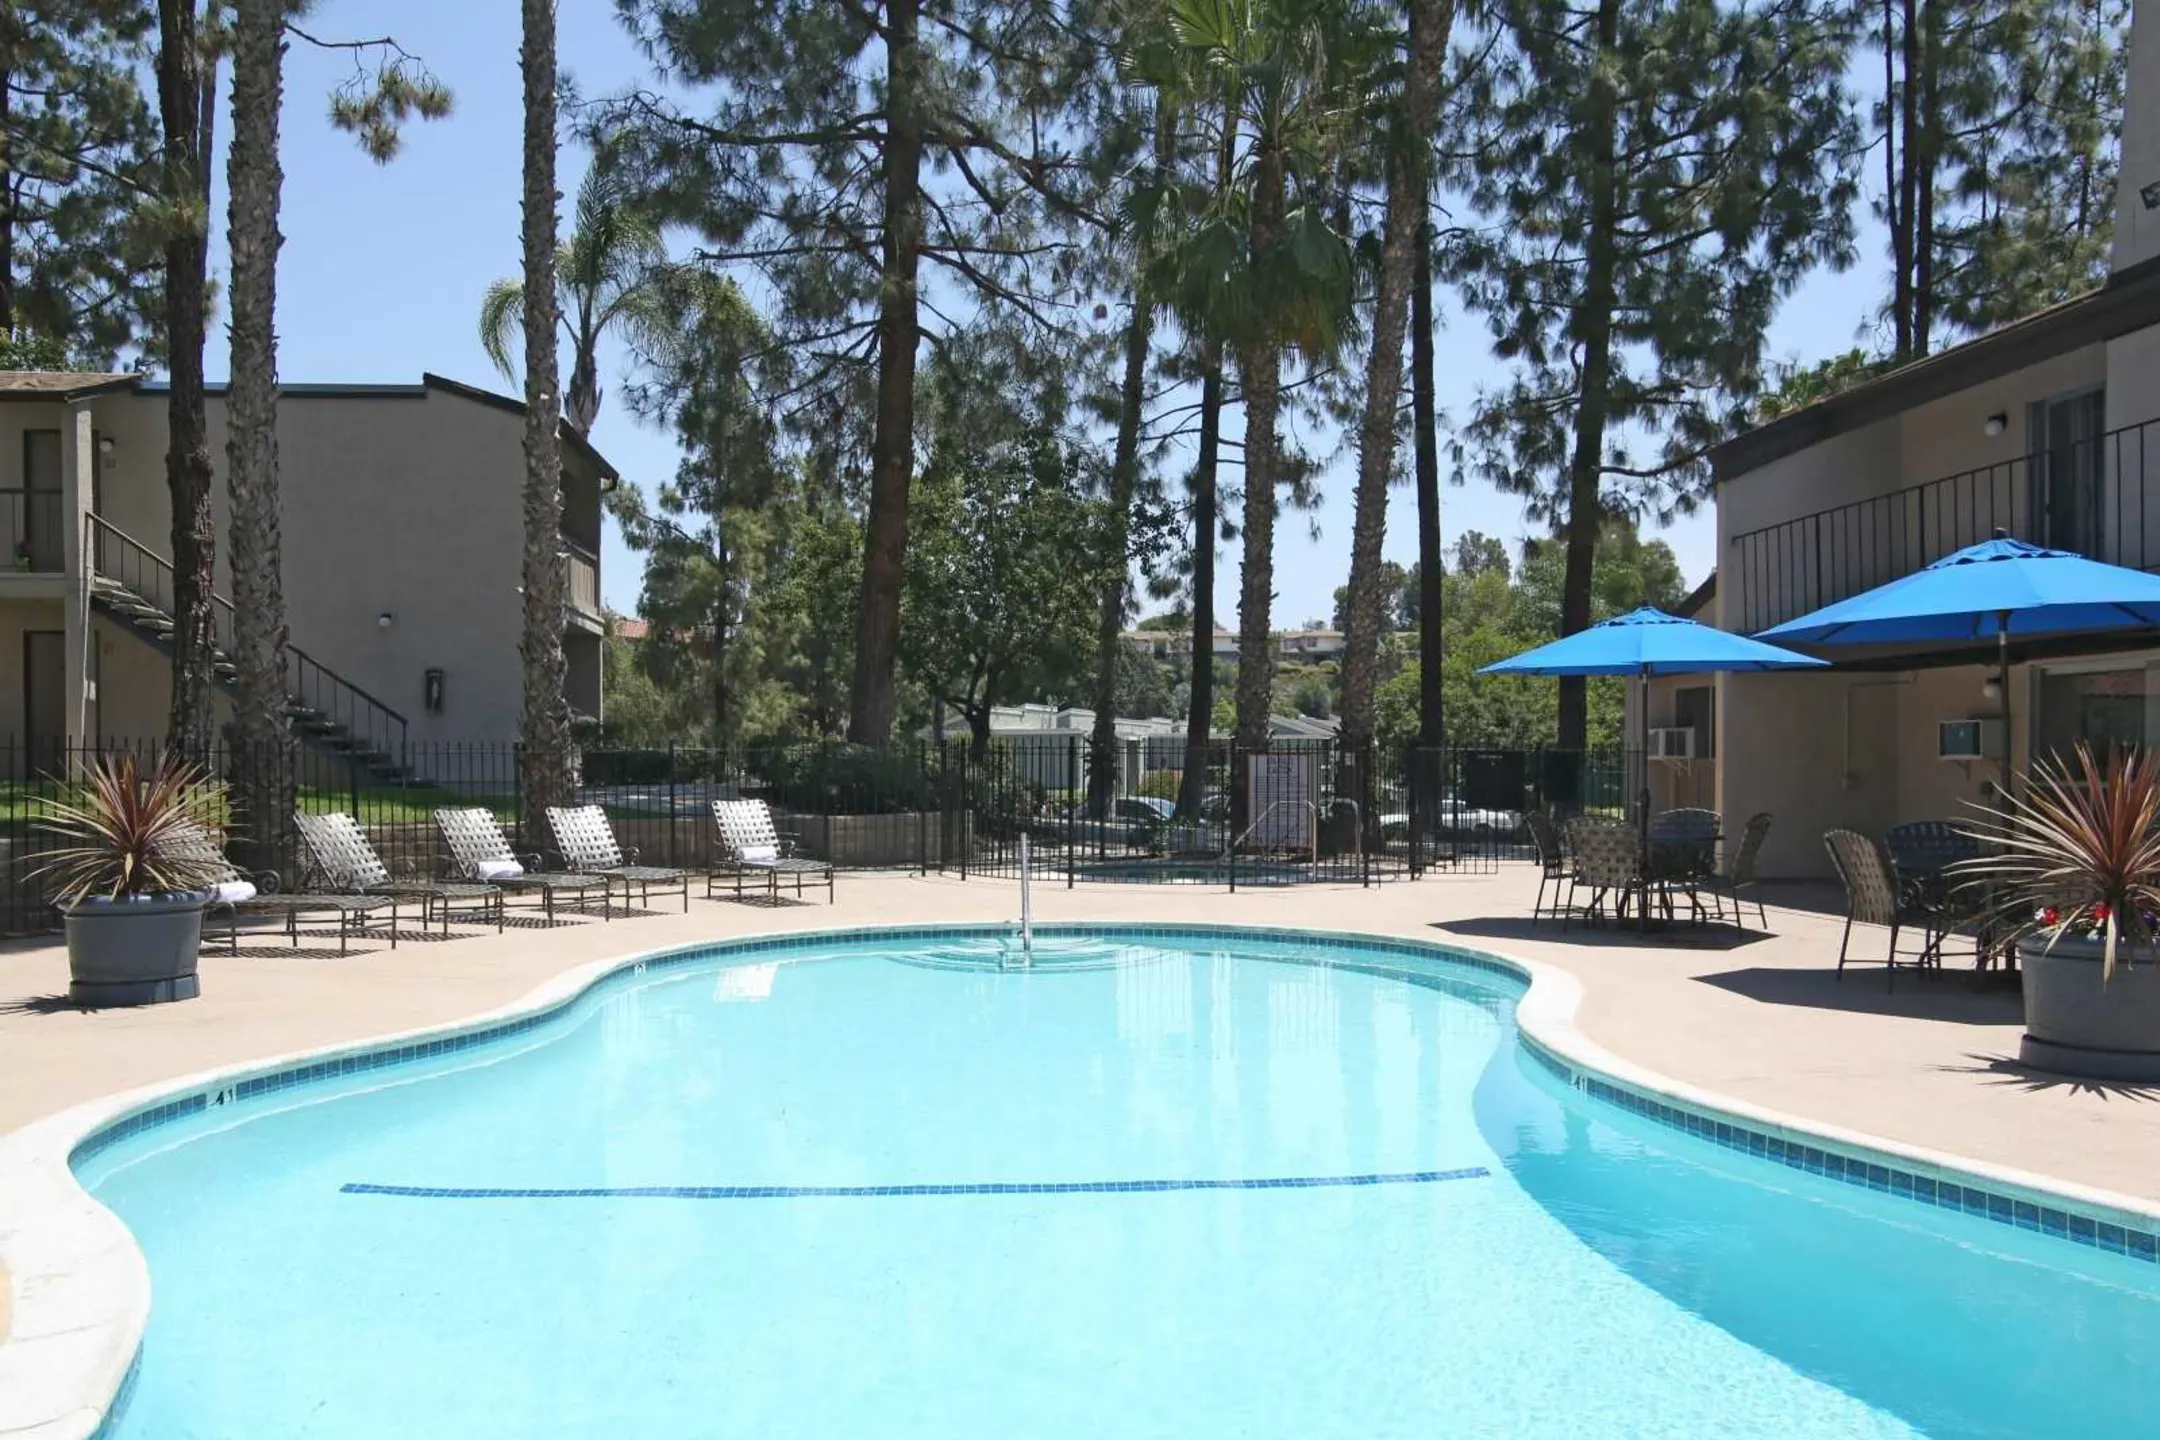 Pool - Shasta Lane - La Mesa, CA